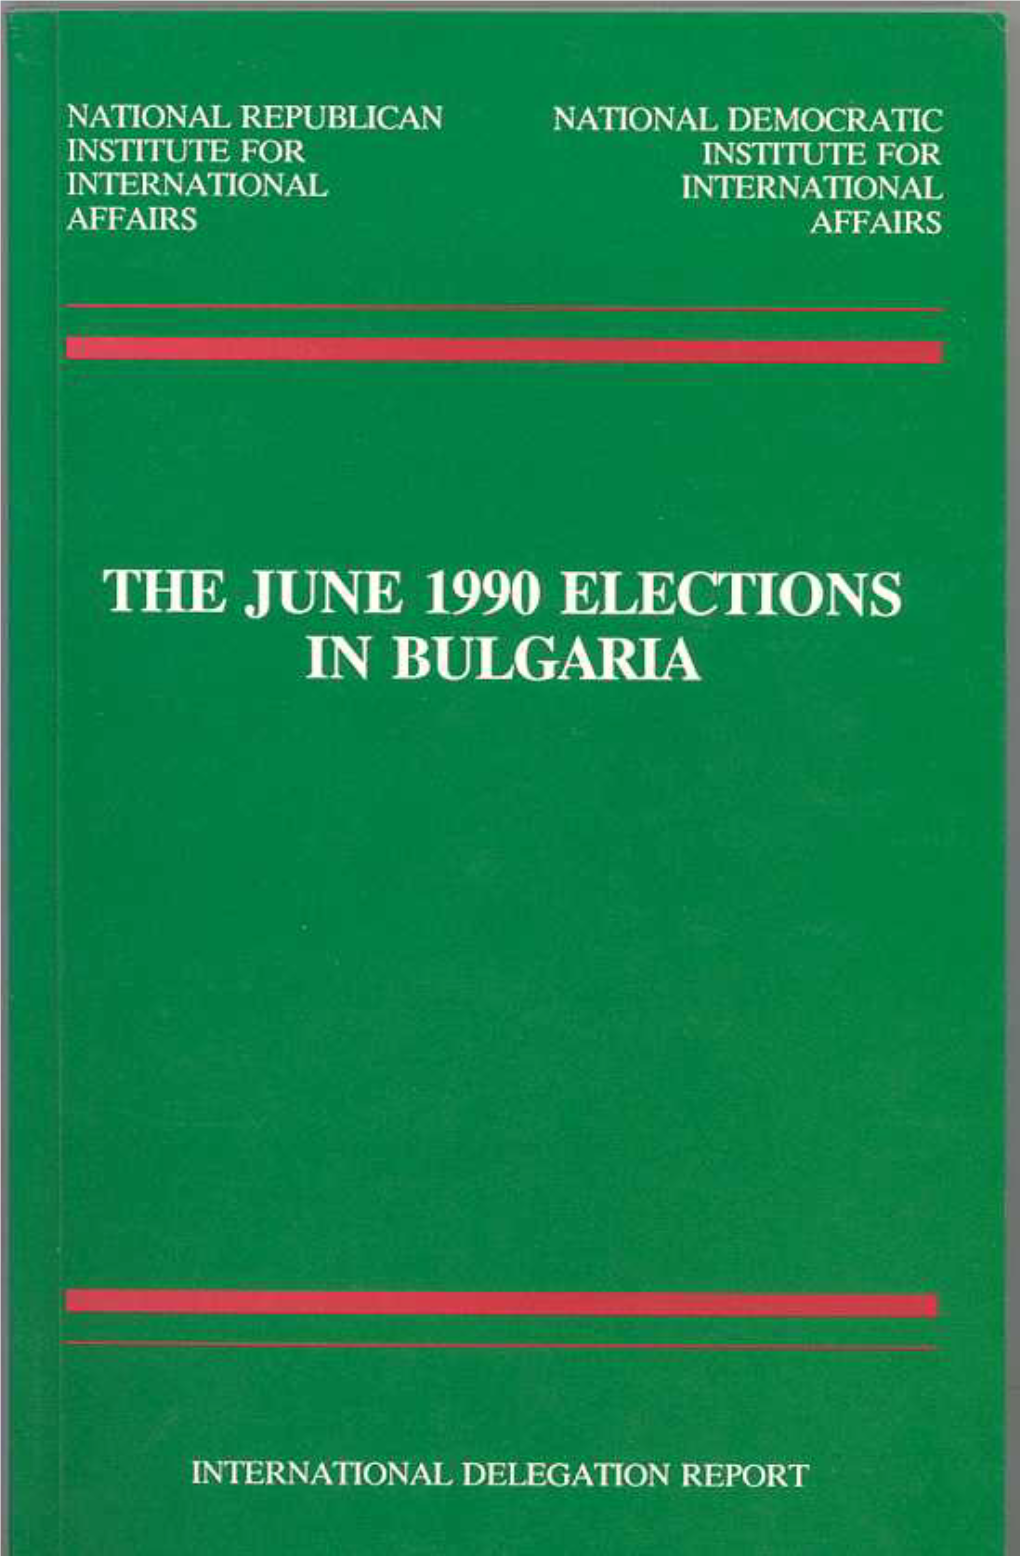 Bulgaria's 1990 Parliamentary Elections